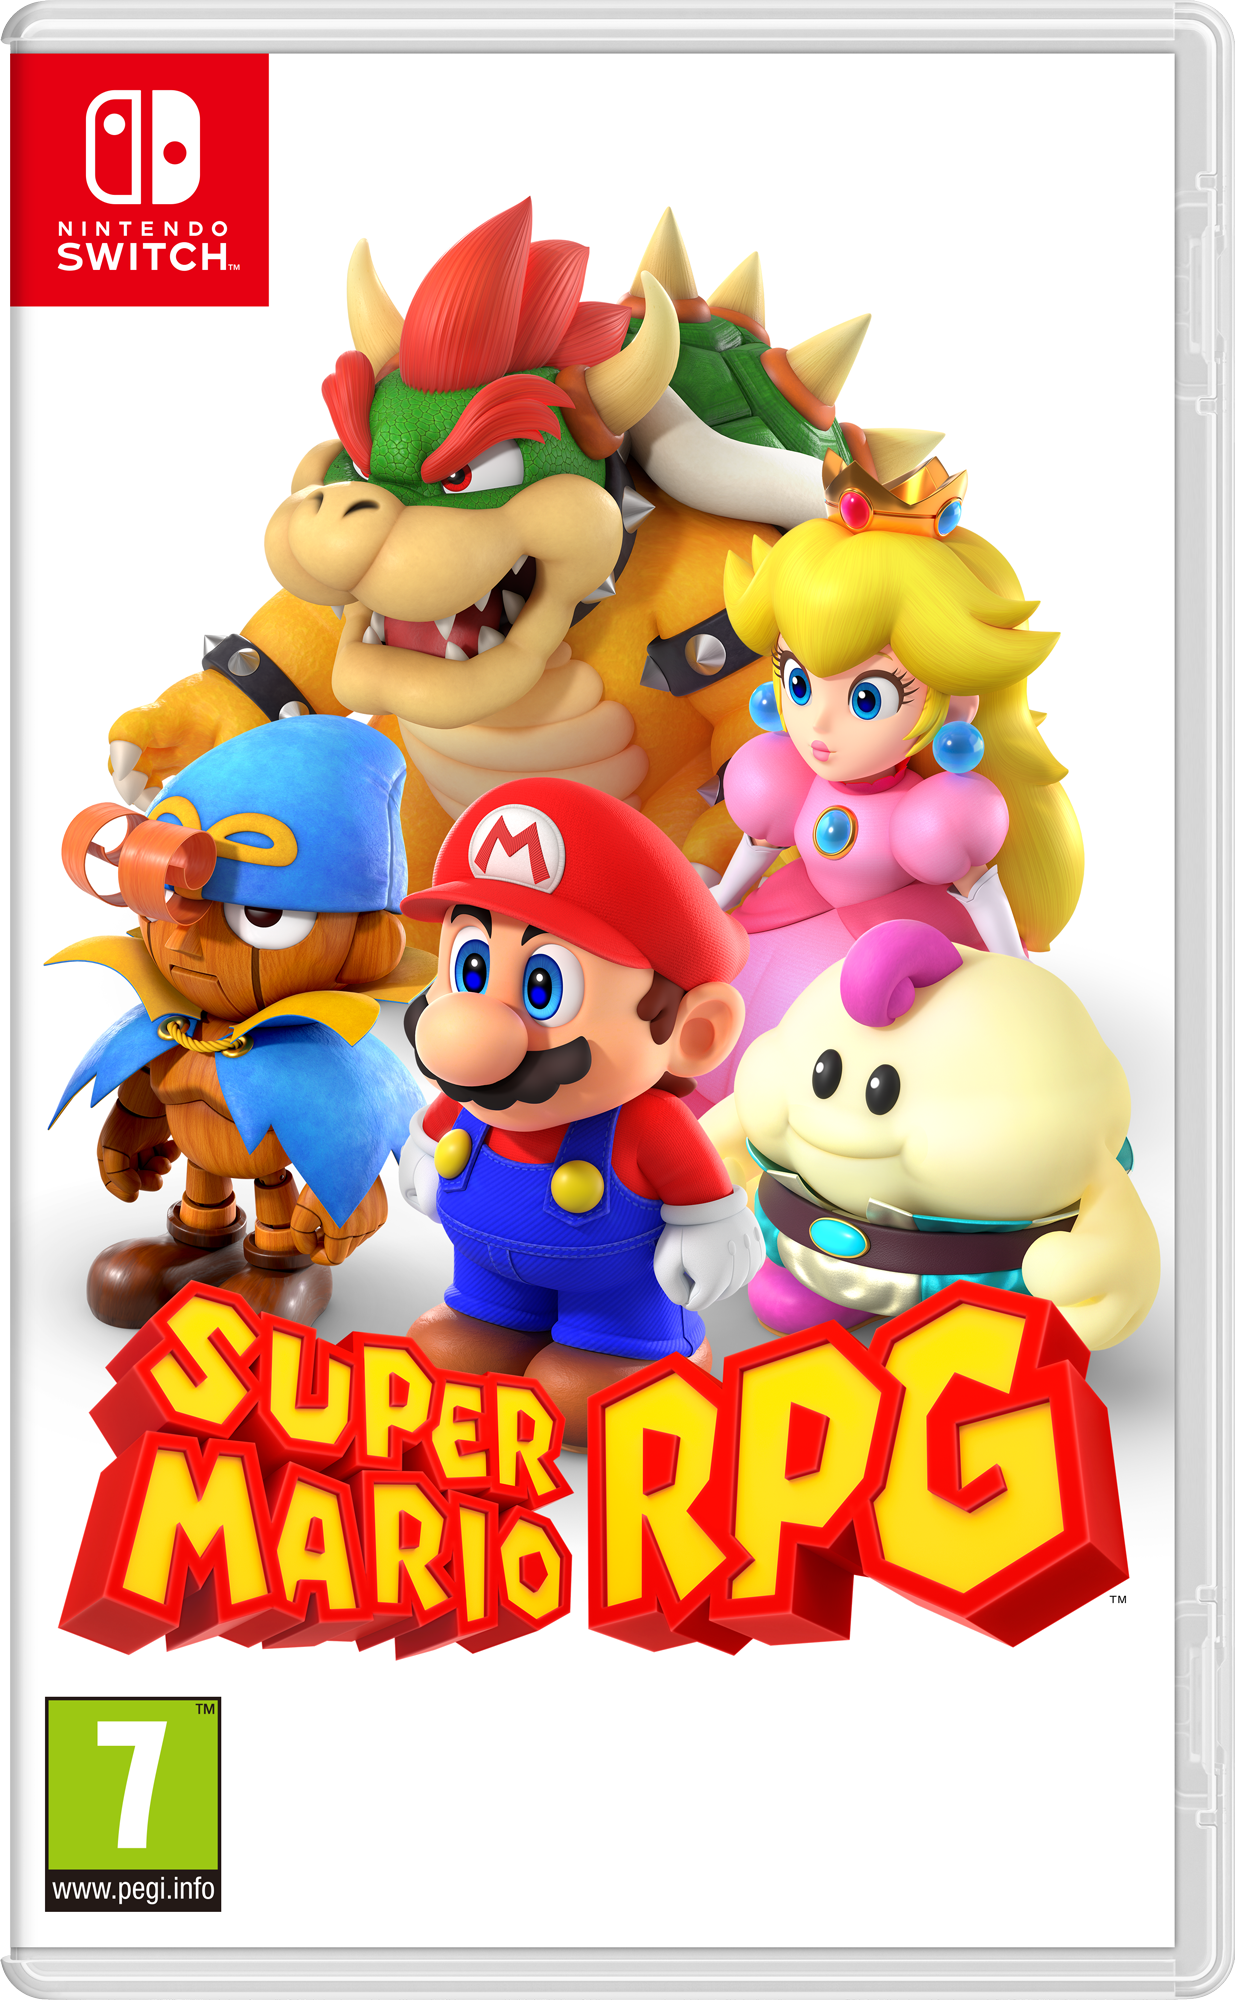 Buy Super Mario RPG - Free shipping